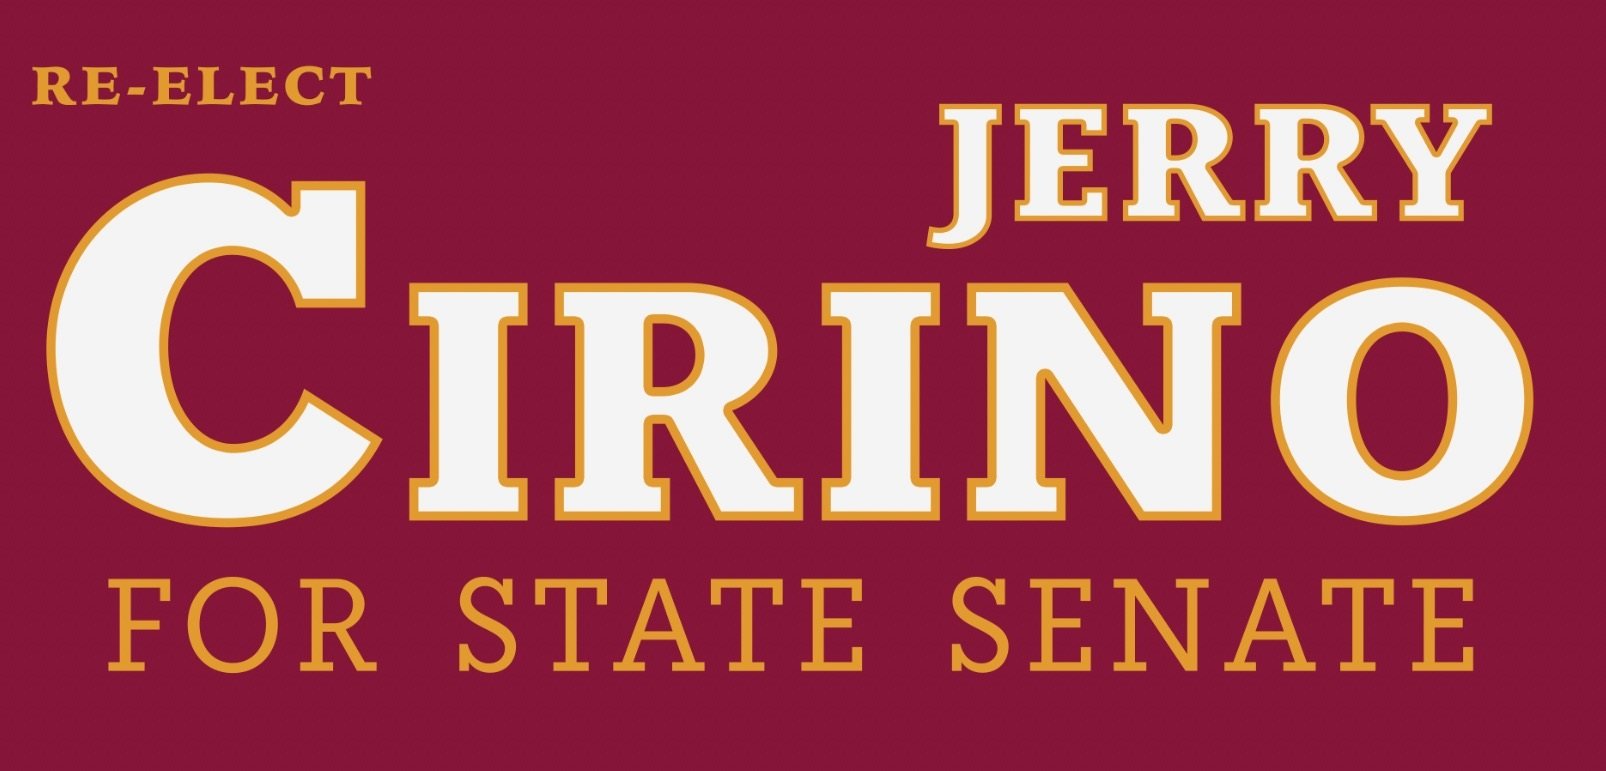 Jerry Cirino for State Senate